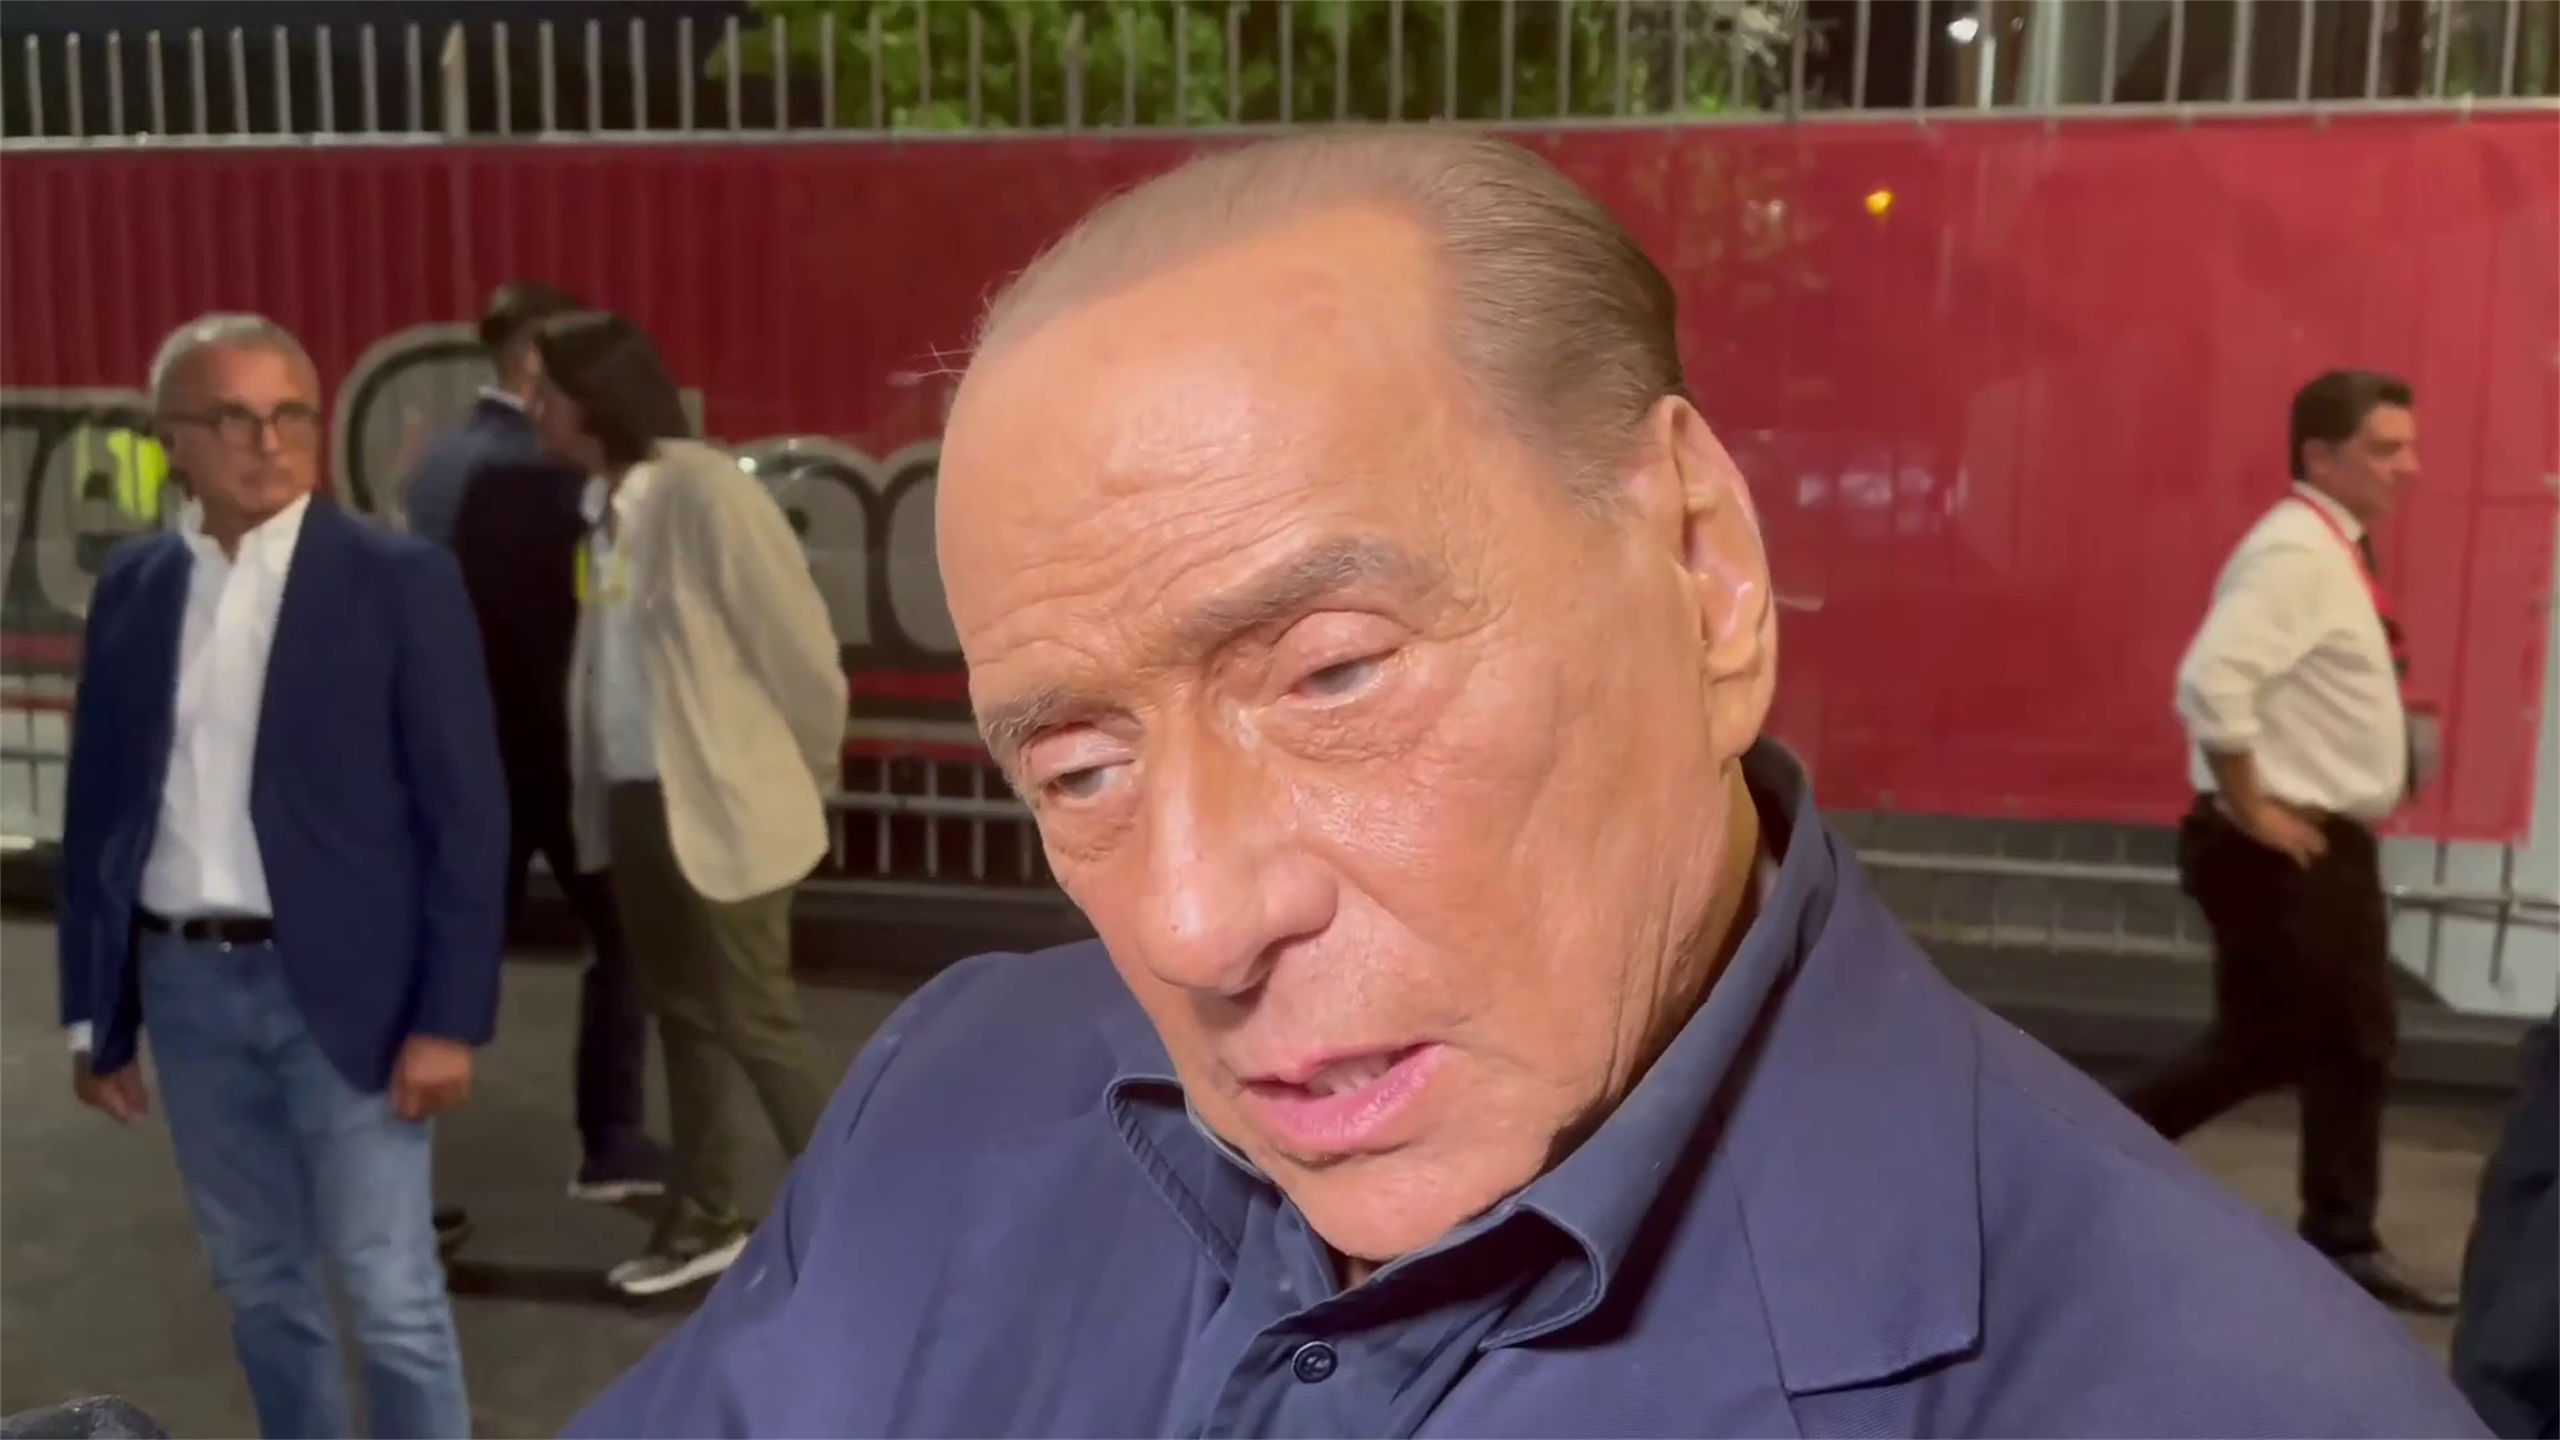 Berlusconi in condizioni preoccupanti, ma è stabile: ipotesi leucemia